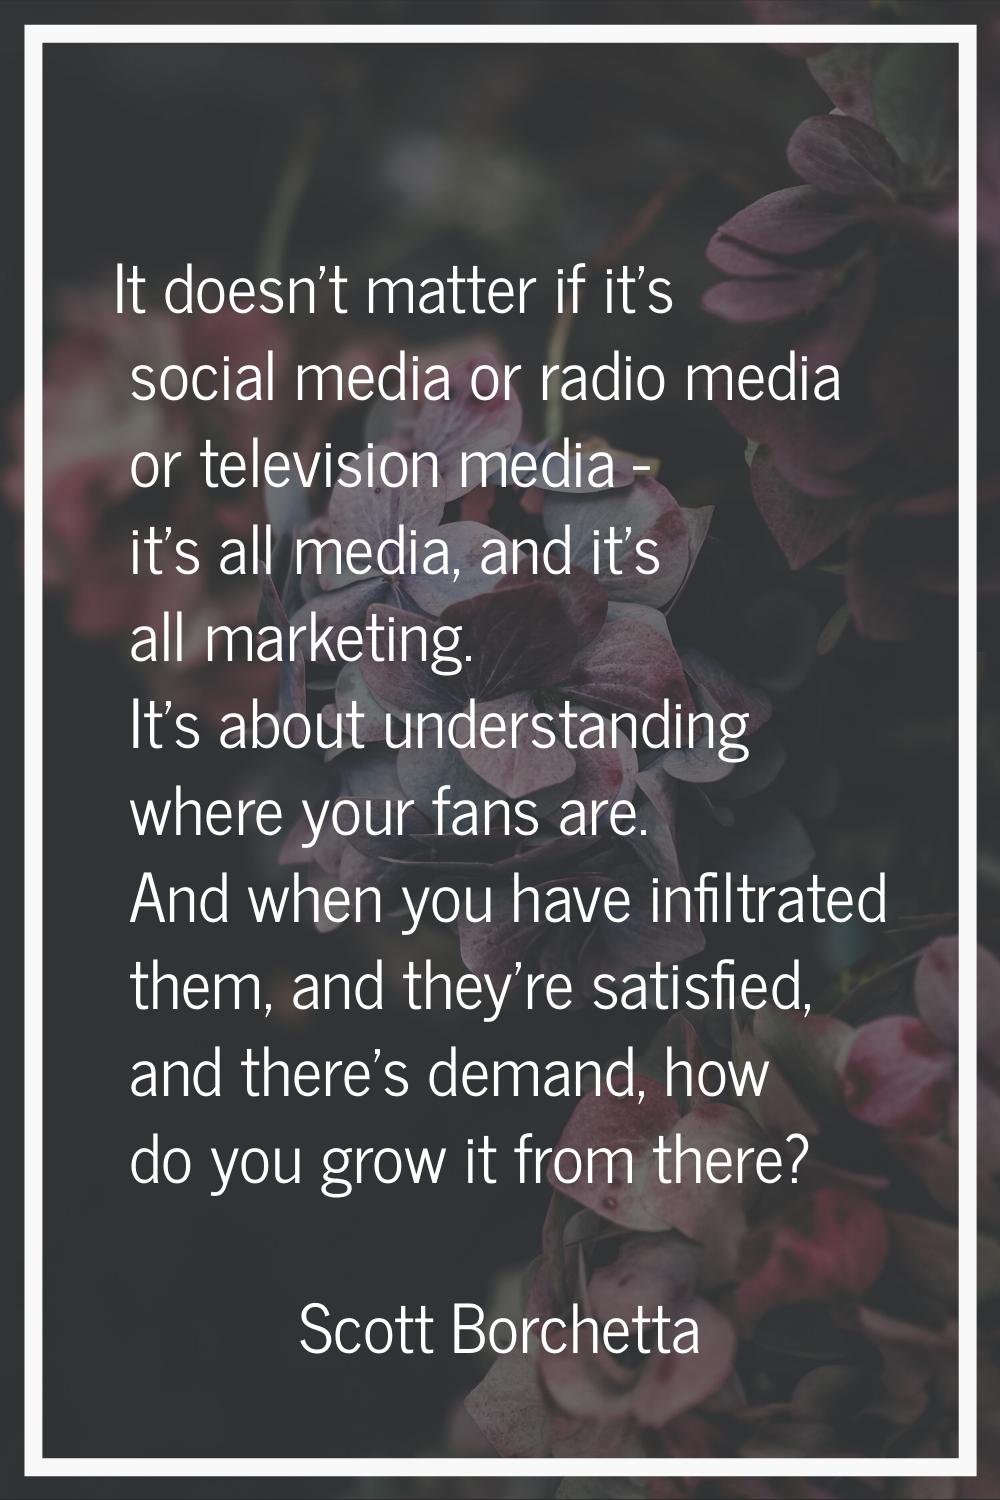 It doesn't matter if it's social media or radio media or television media - it's all media, and it'